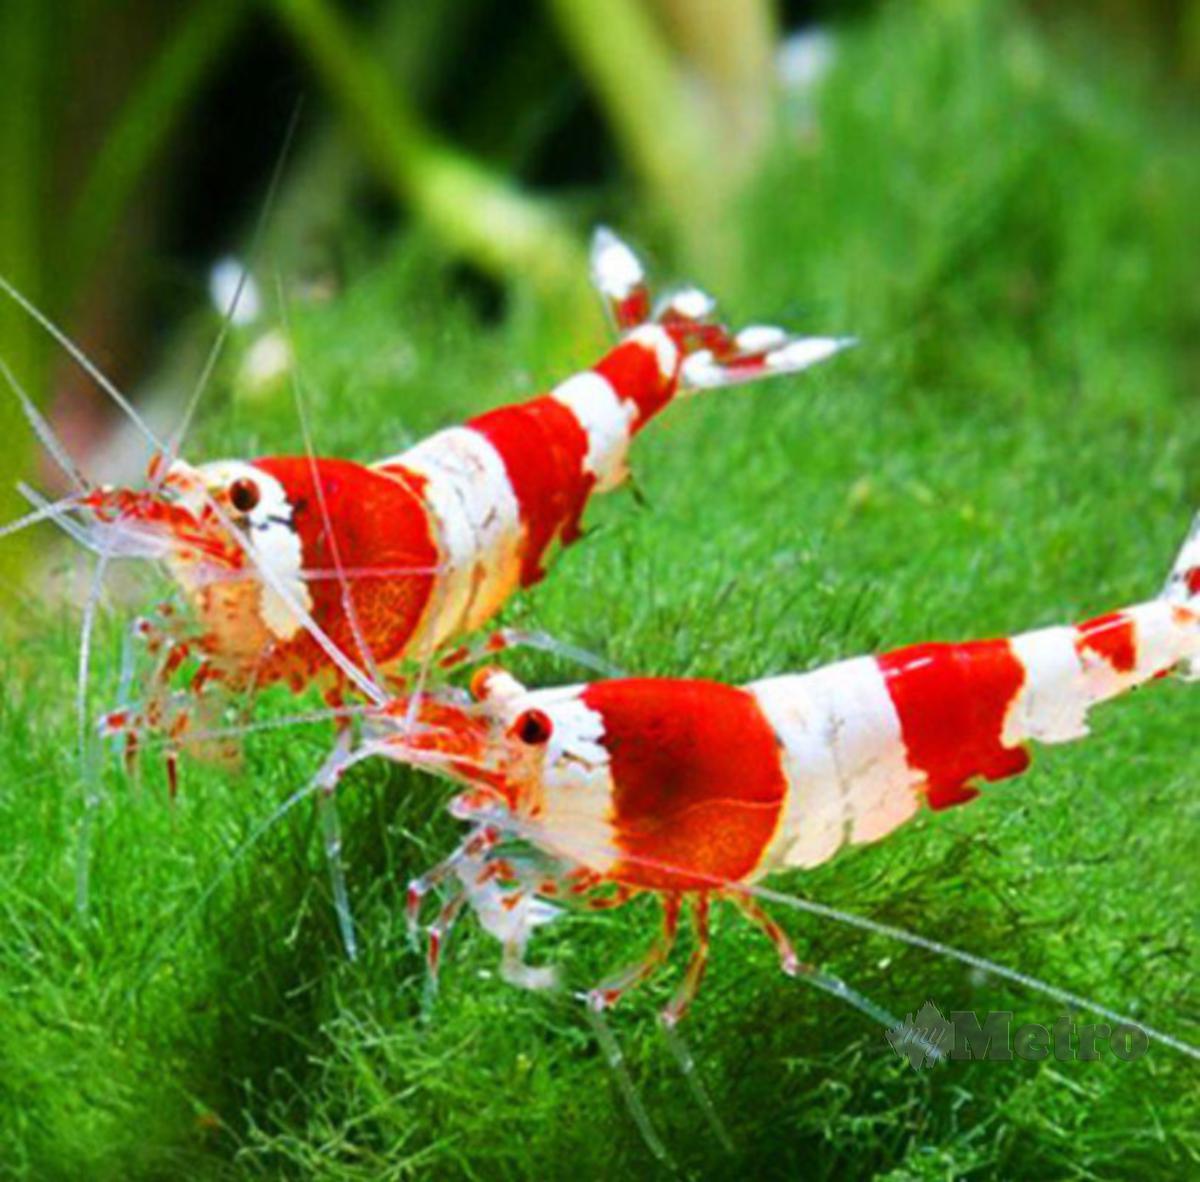 WARNA merah pada spesies Red Cherry Shrimp menaikkan seri akuarium.